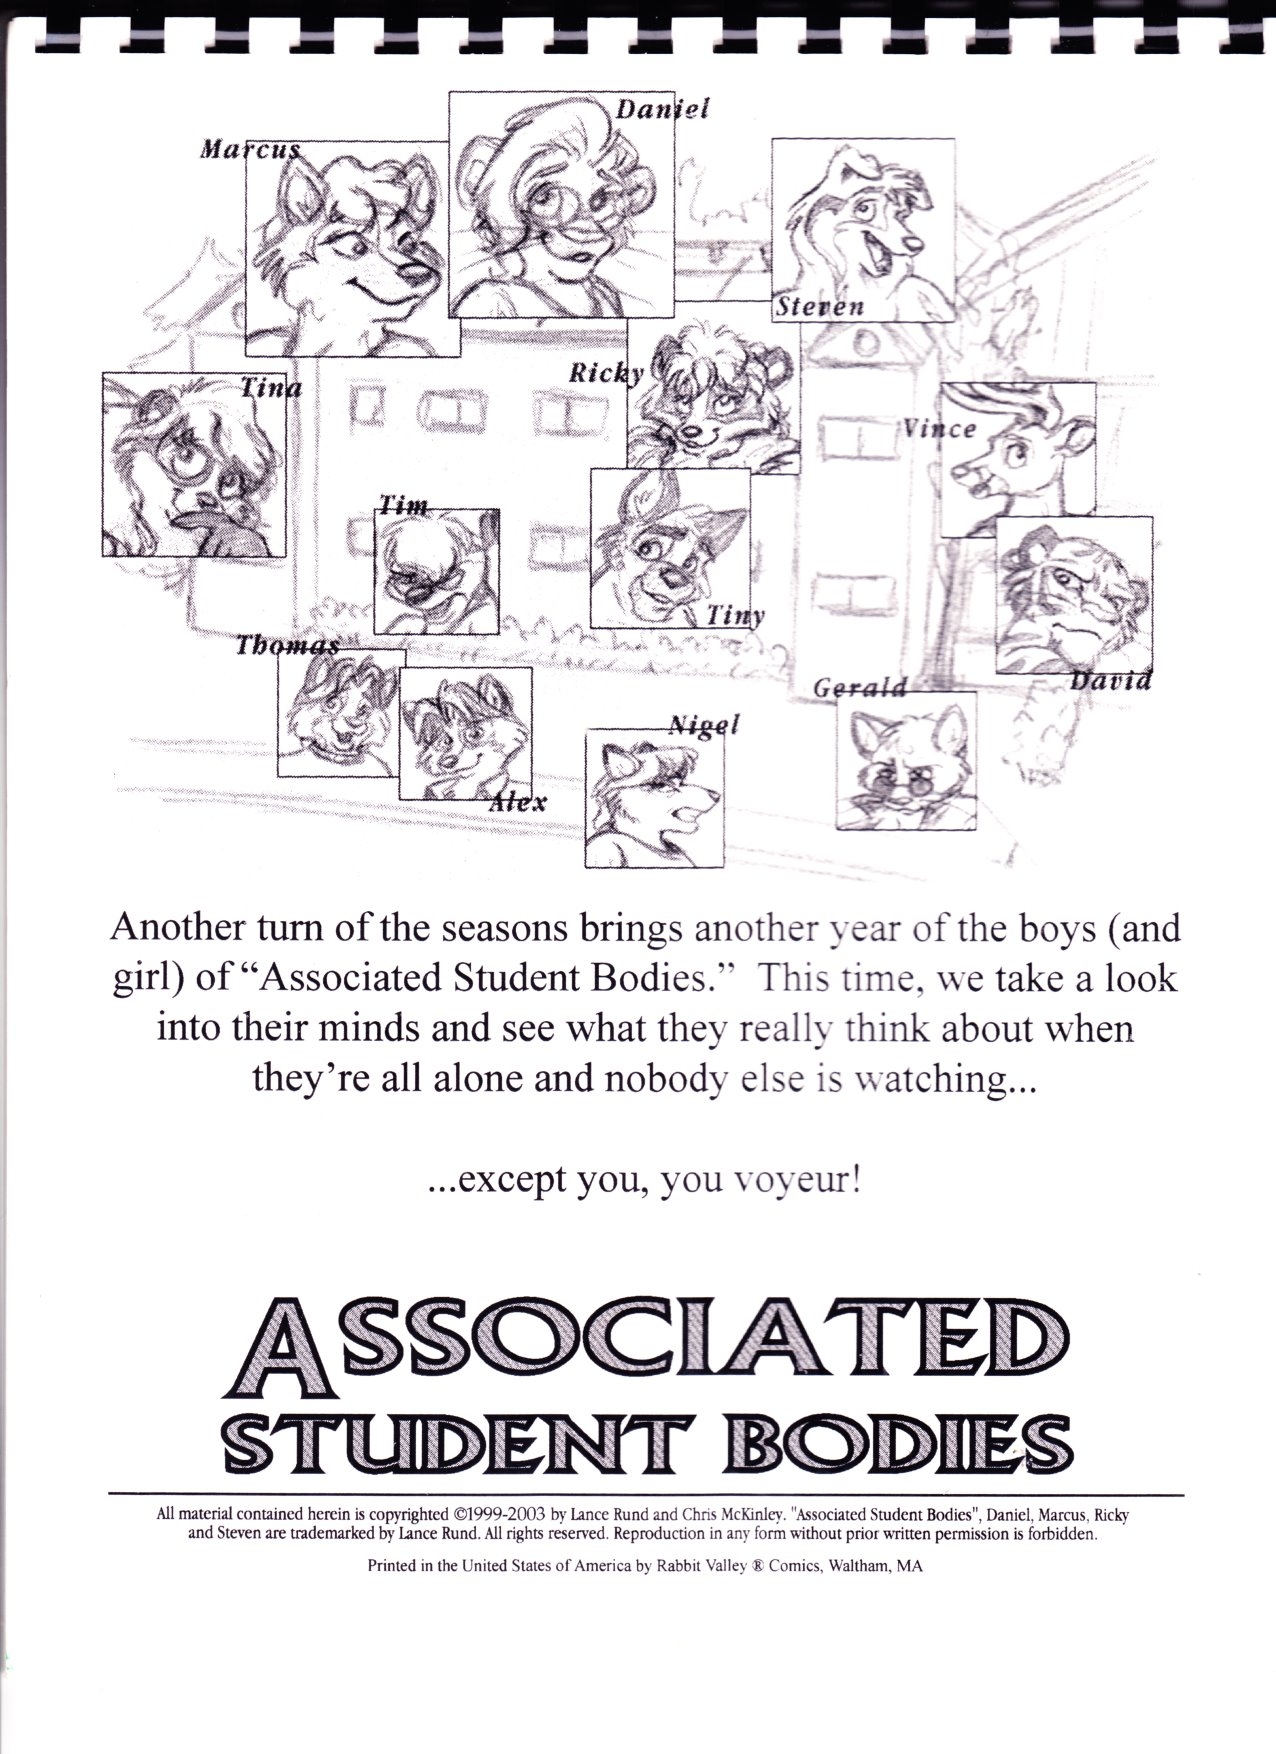 Associated Student Bodies Secret Fantasies 1